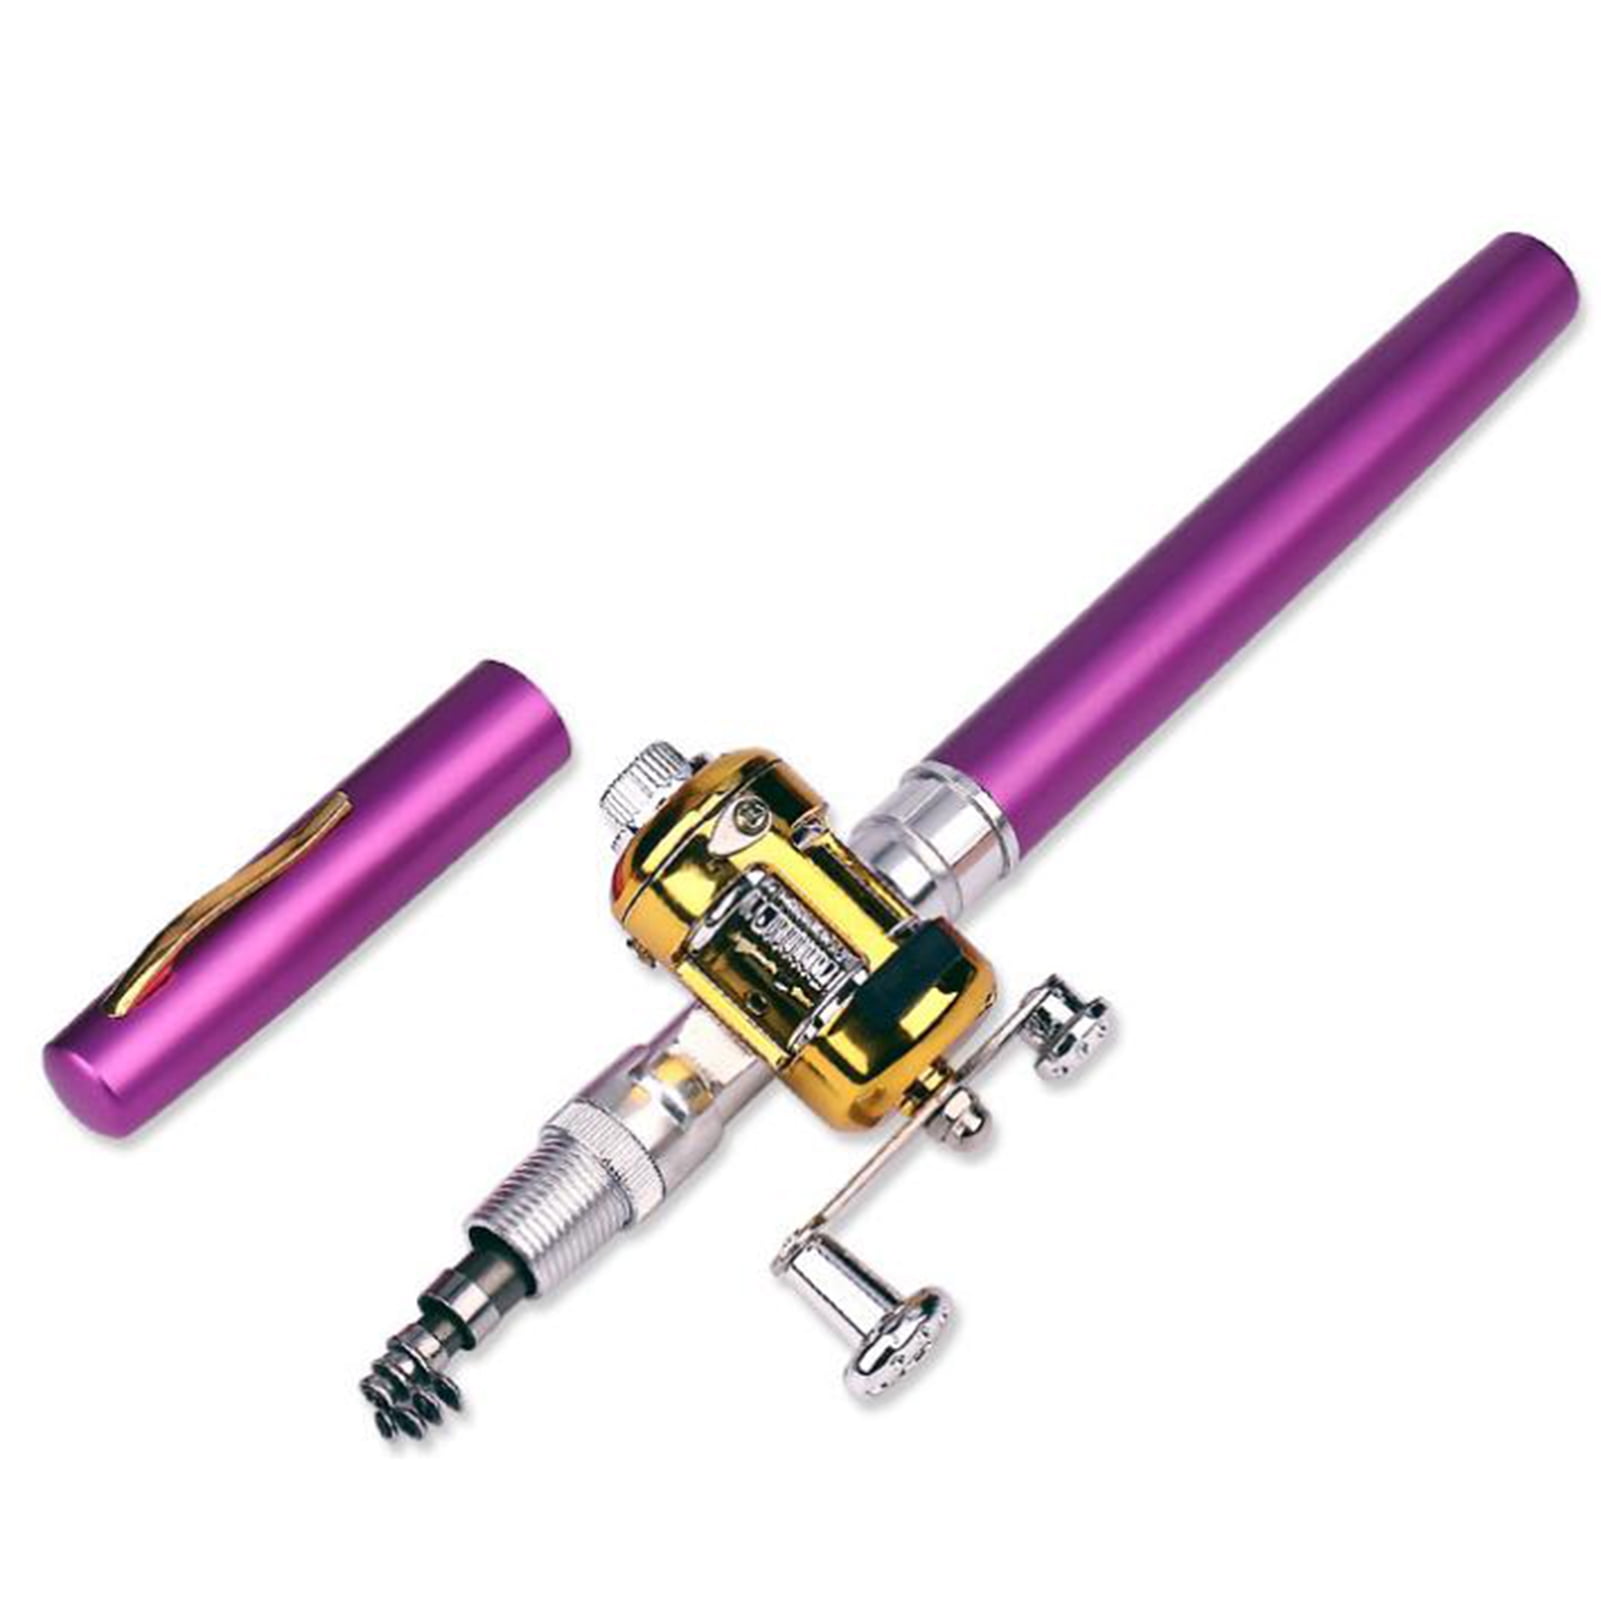 Walbest Telescopic Pen Fishing Pole Mini Pocket Fishing Rod and